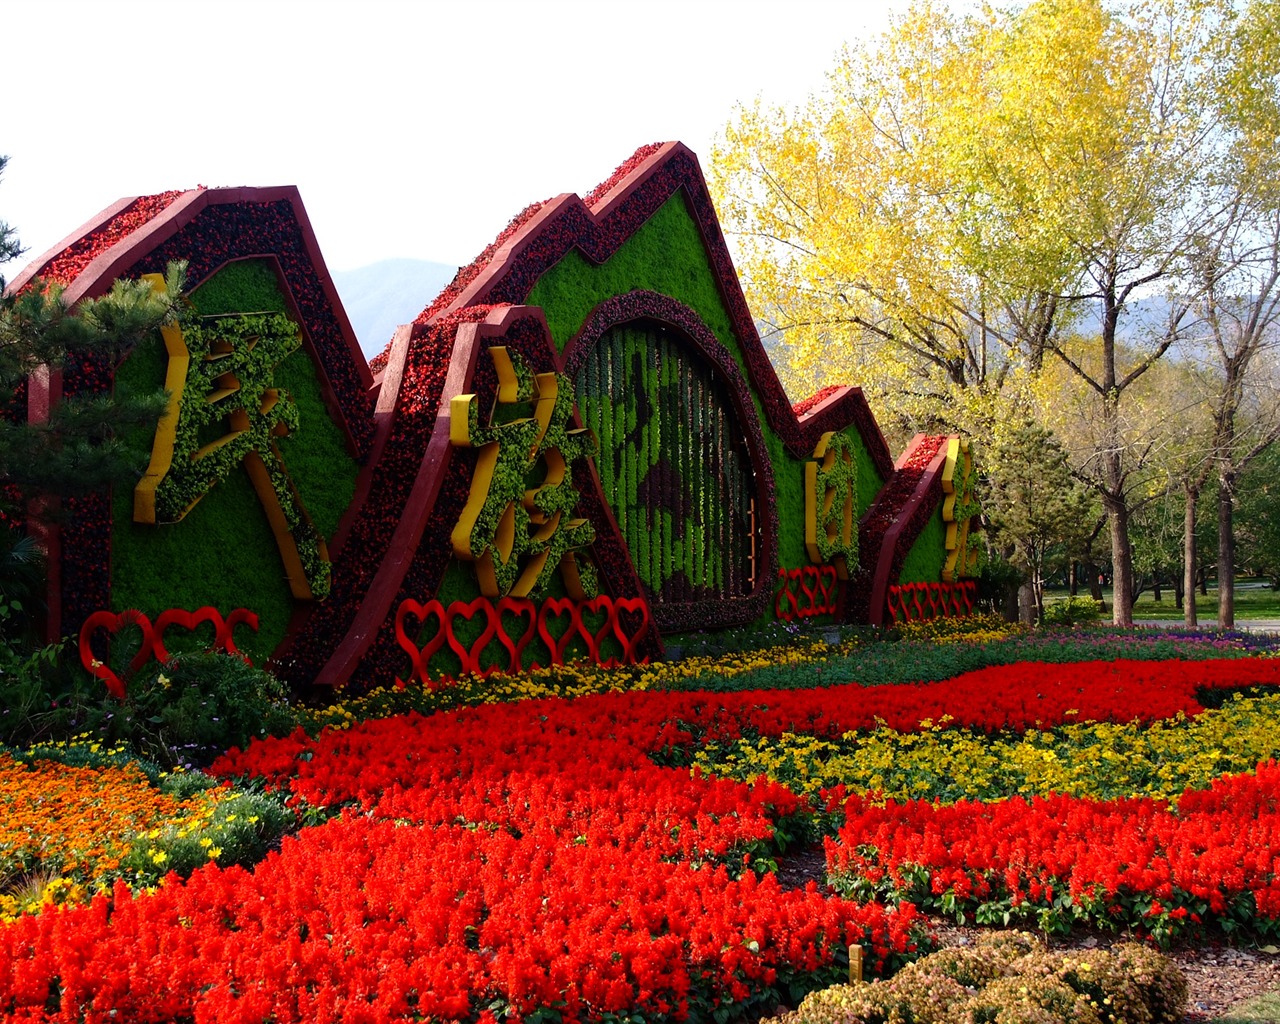 Xiangshan jardín de otoño (obras barras de refuerzo) #1 - 1280x1024